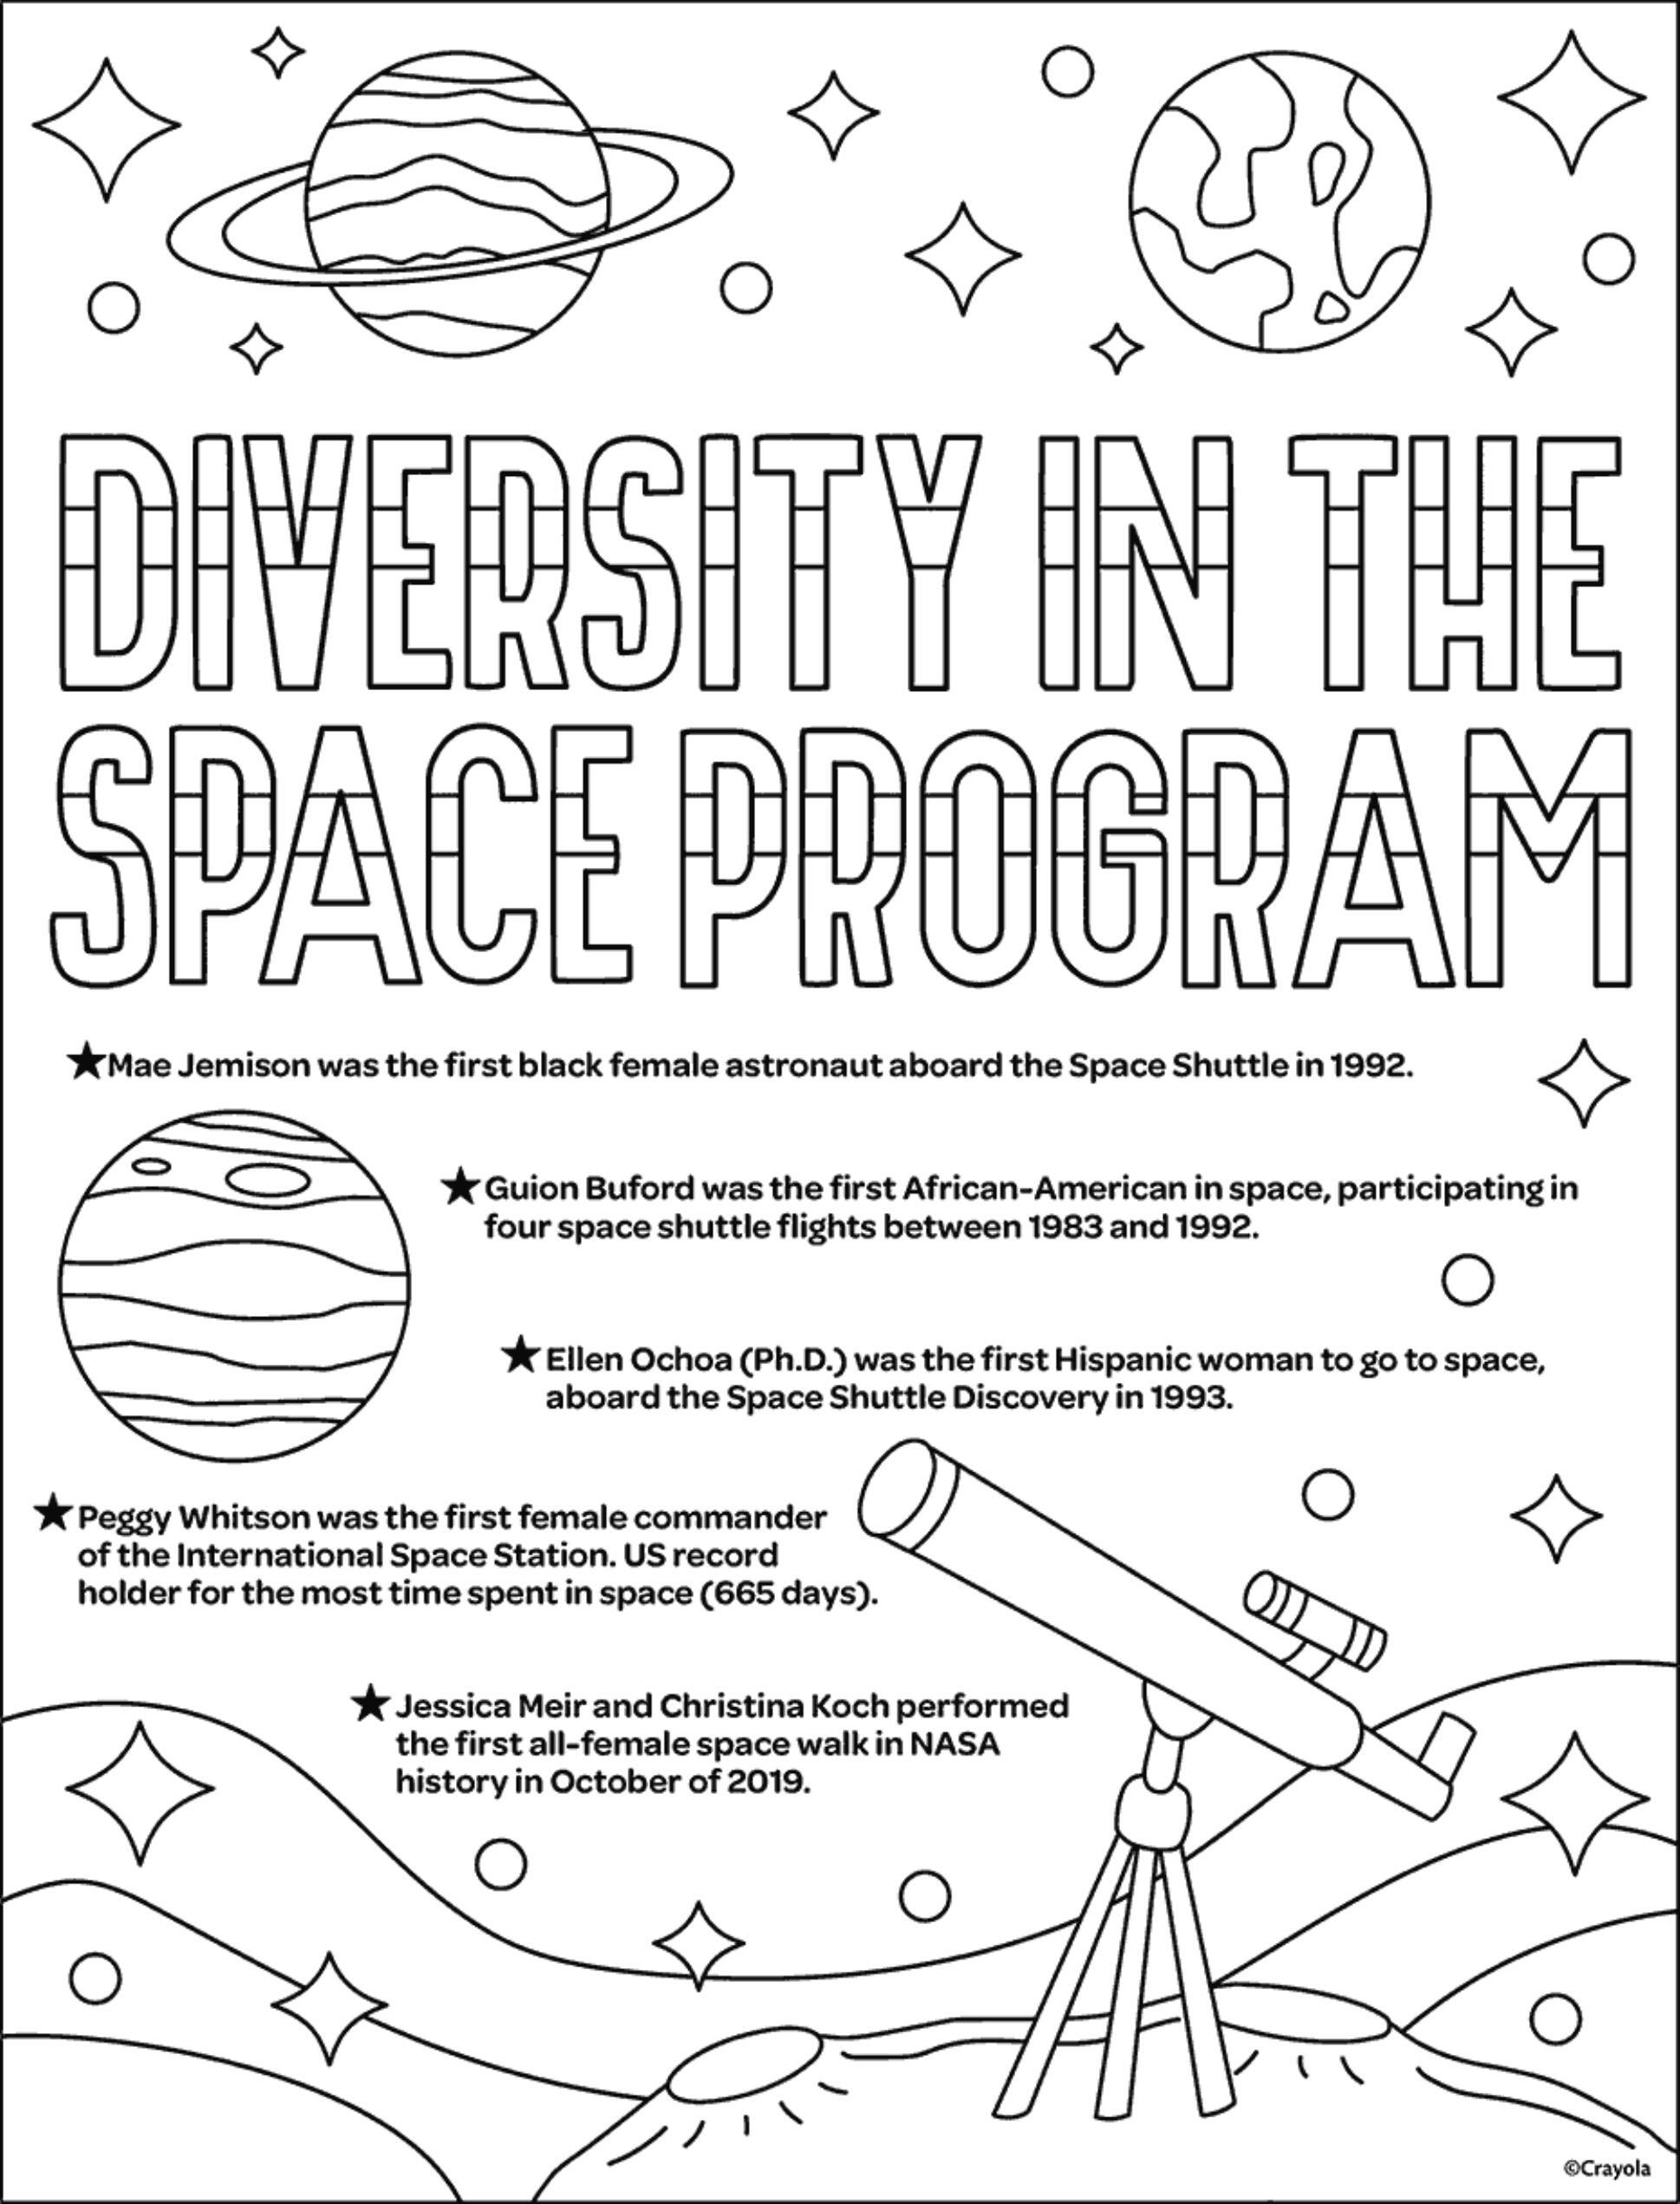 Diversity In Space Program